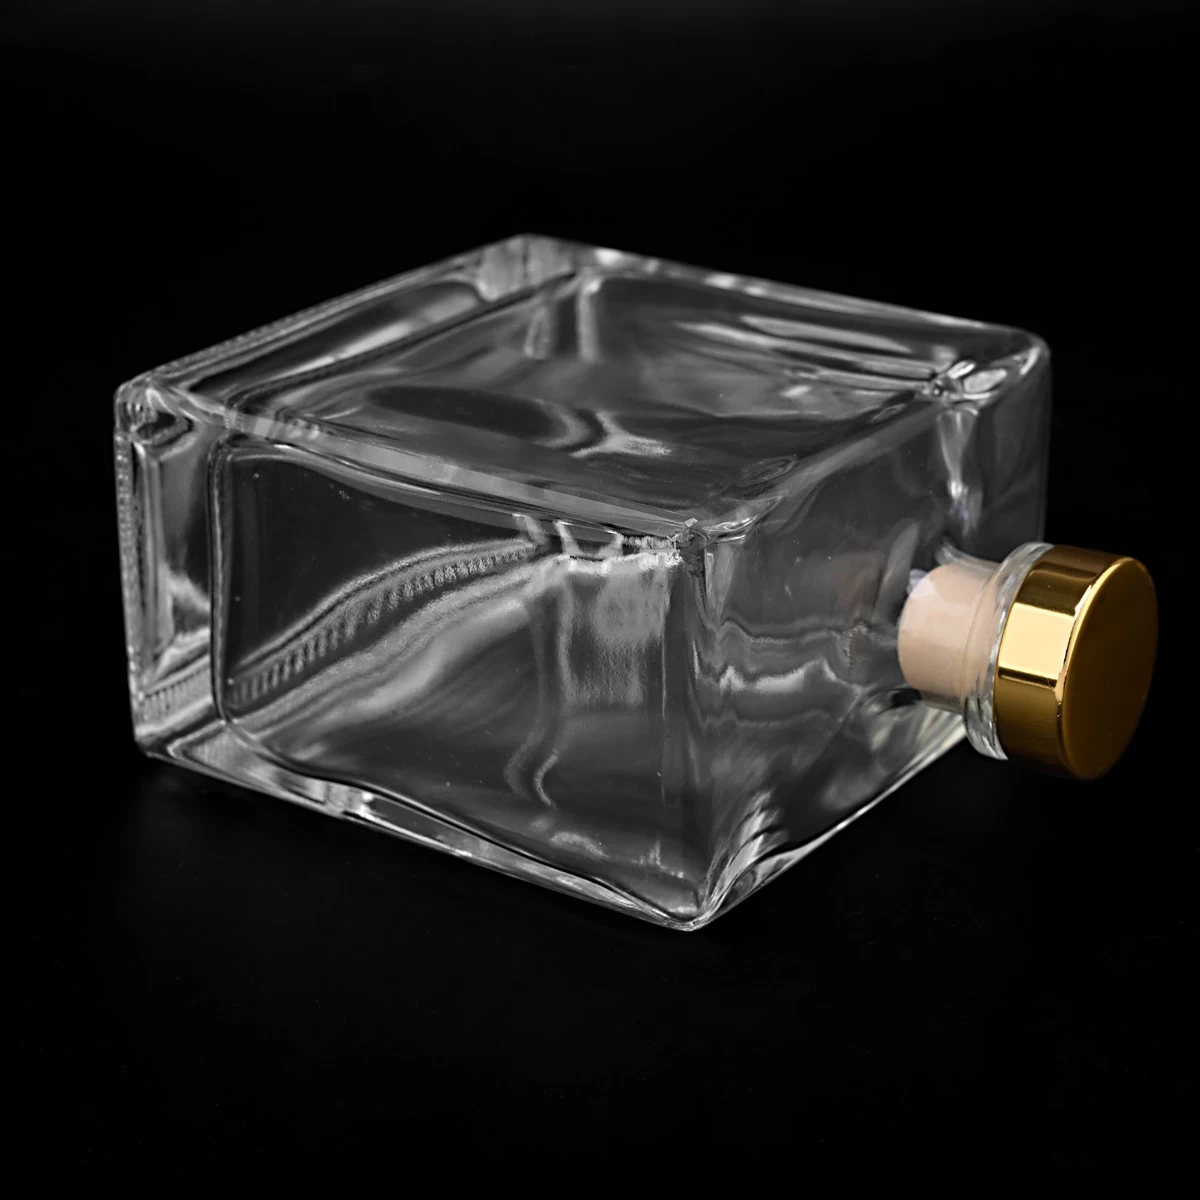 home decor round glass diffuser bottle - COPY - 7q186v